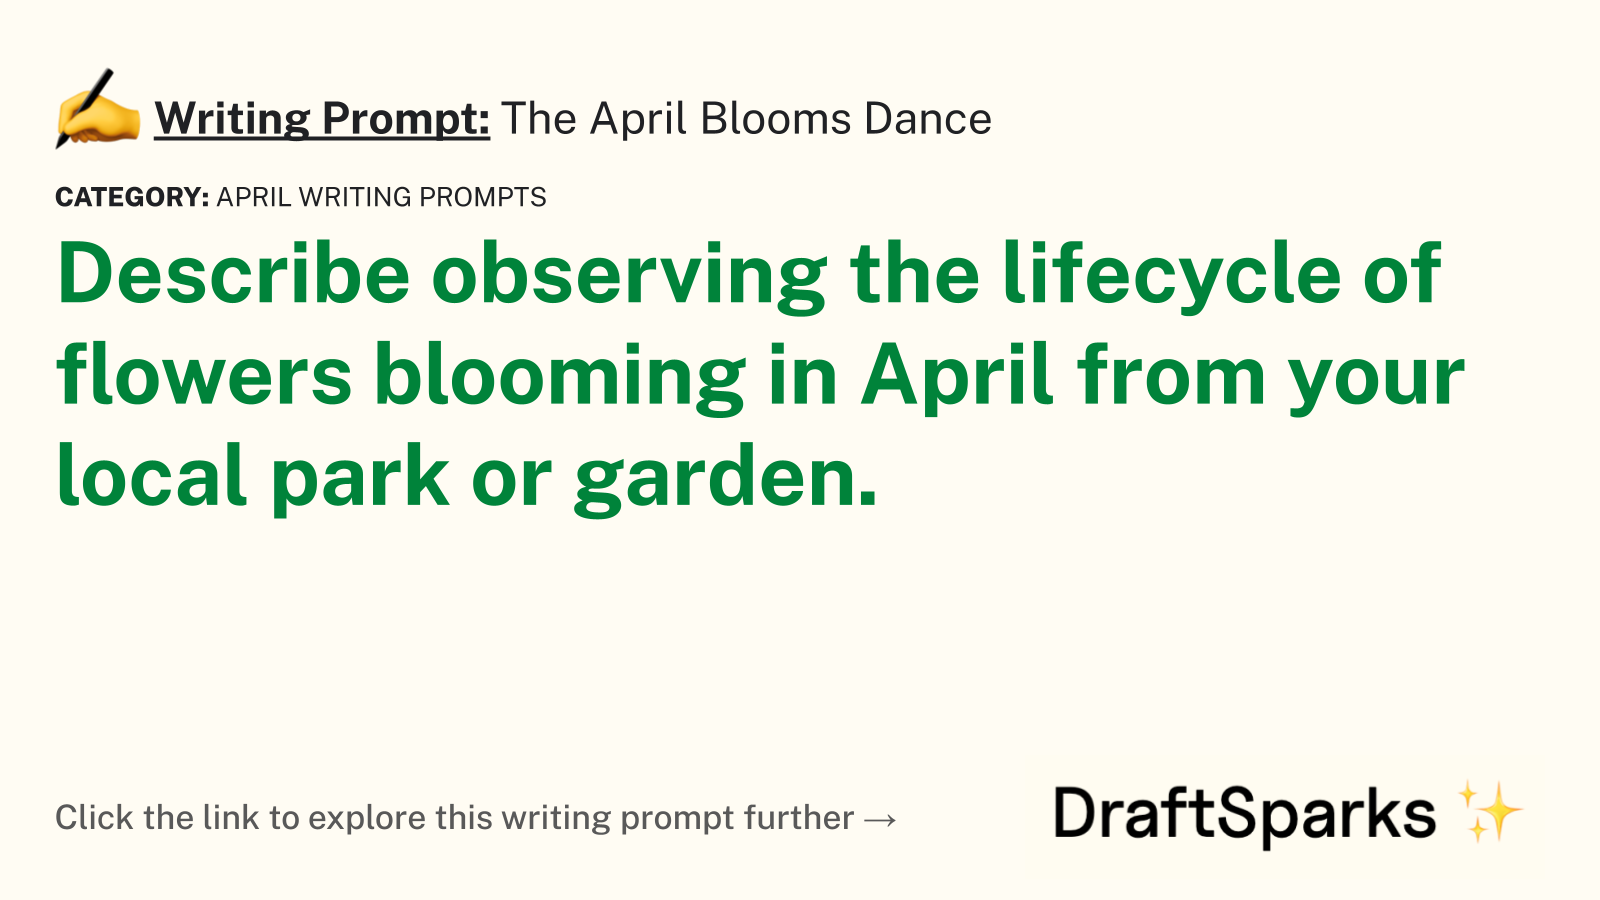 The April Blooms Dance